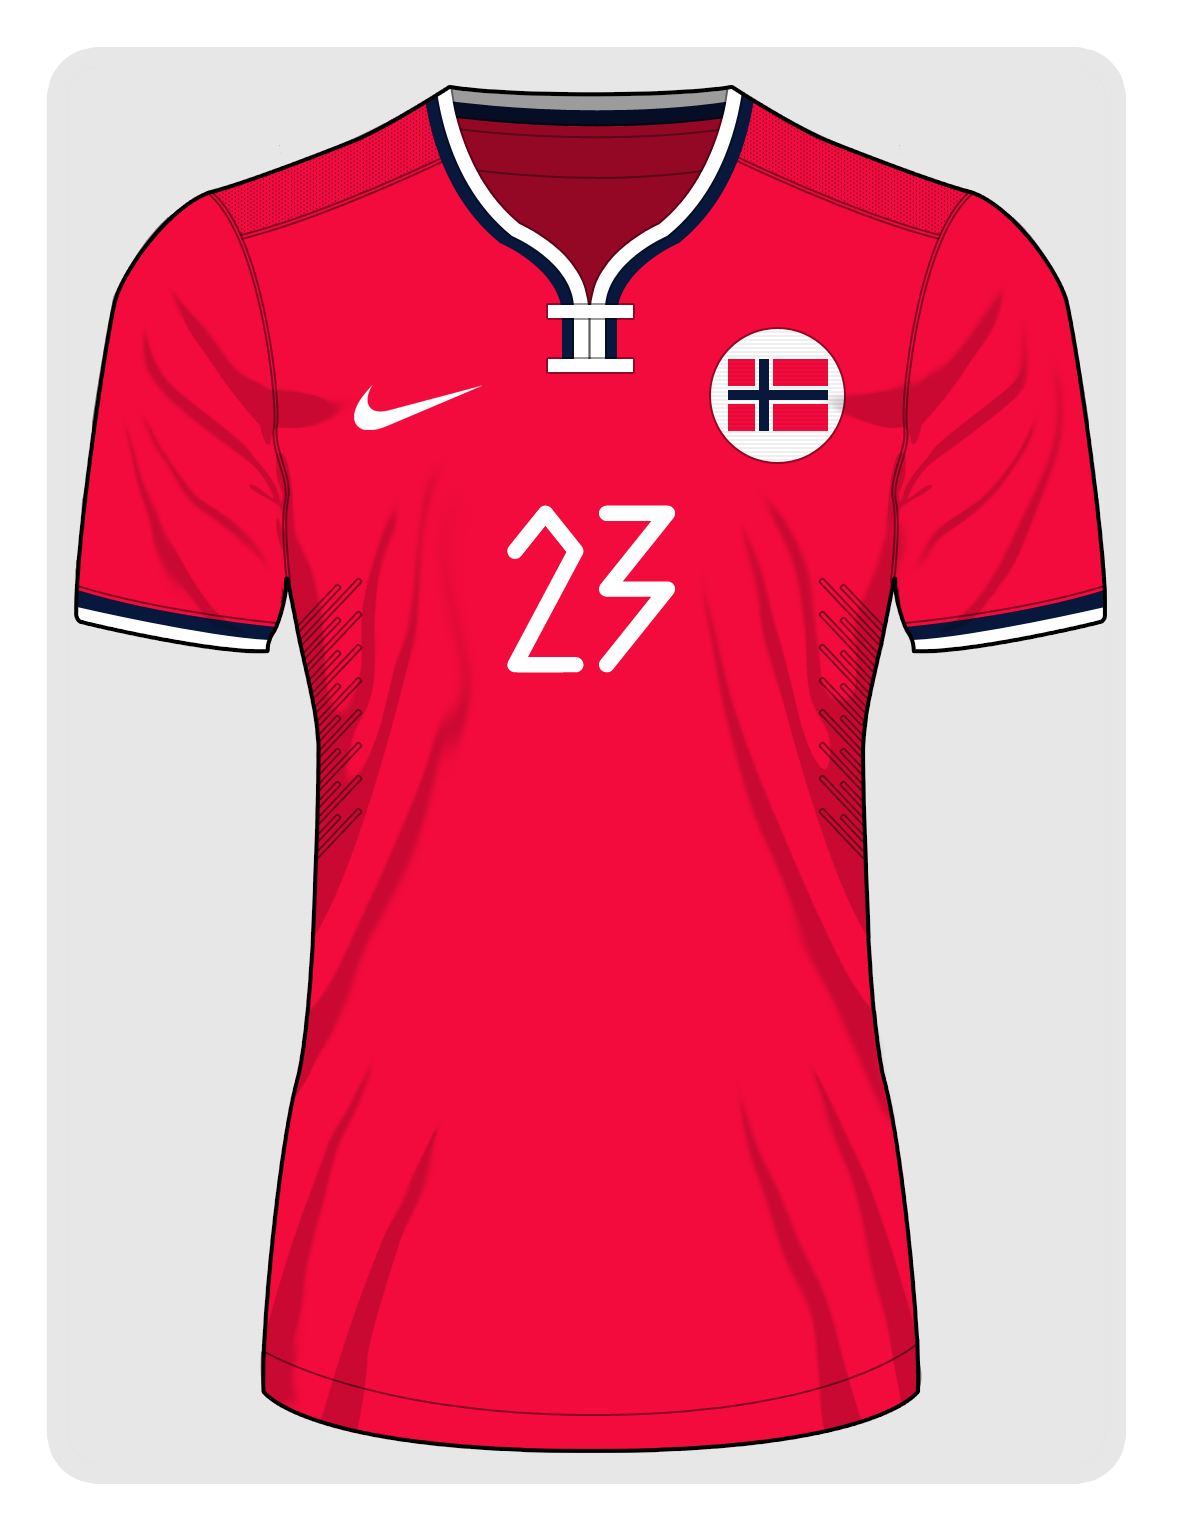 Norway Home kit